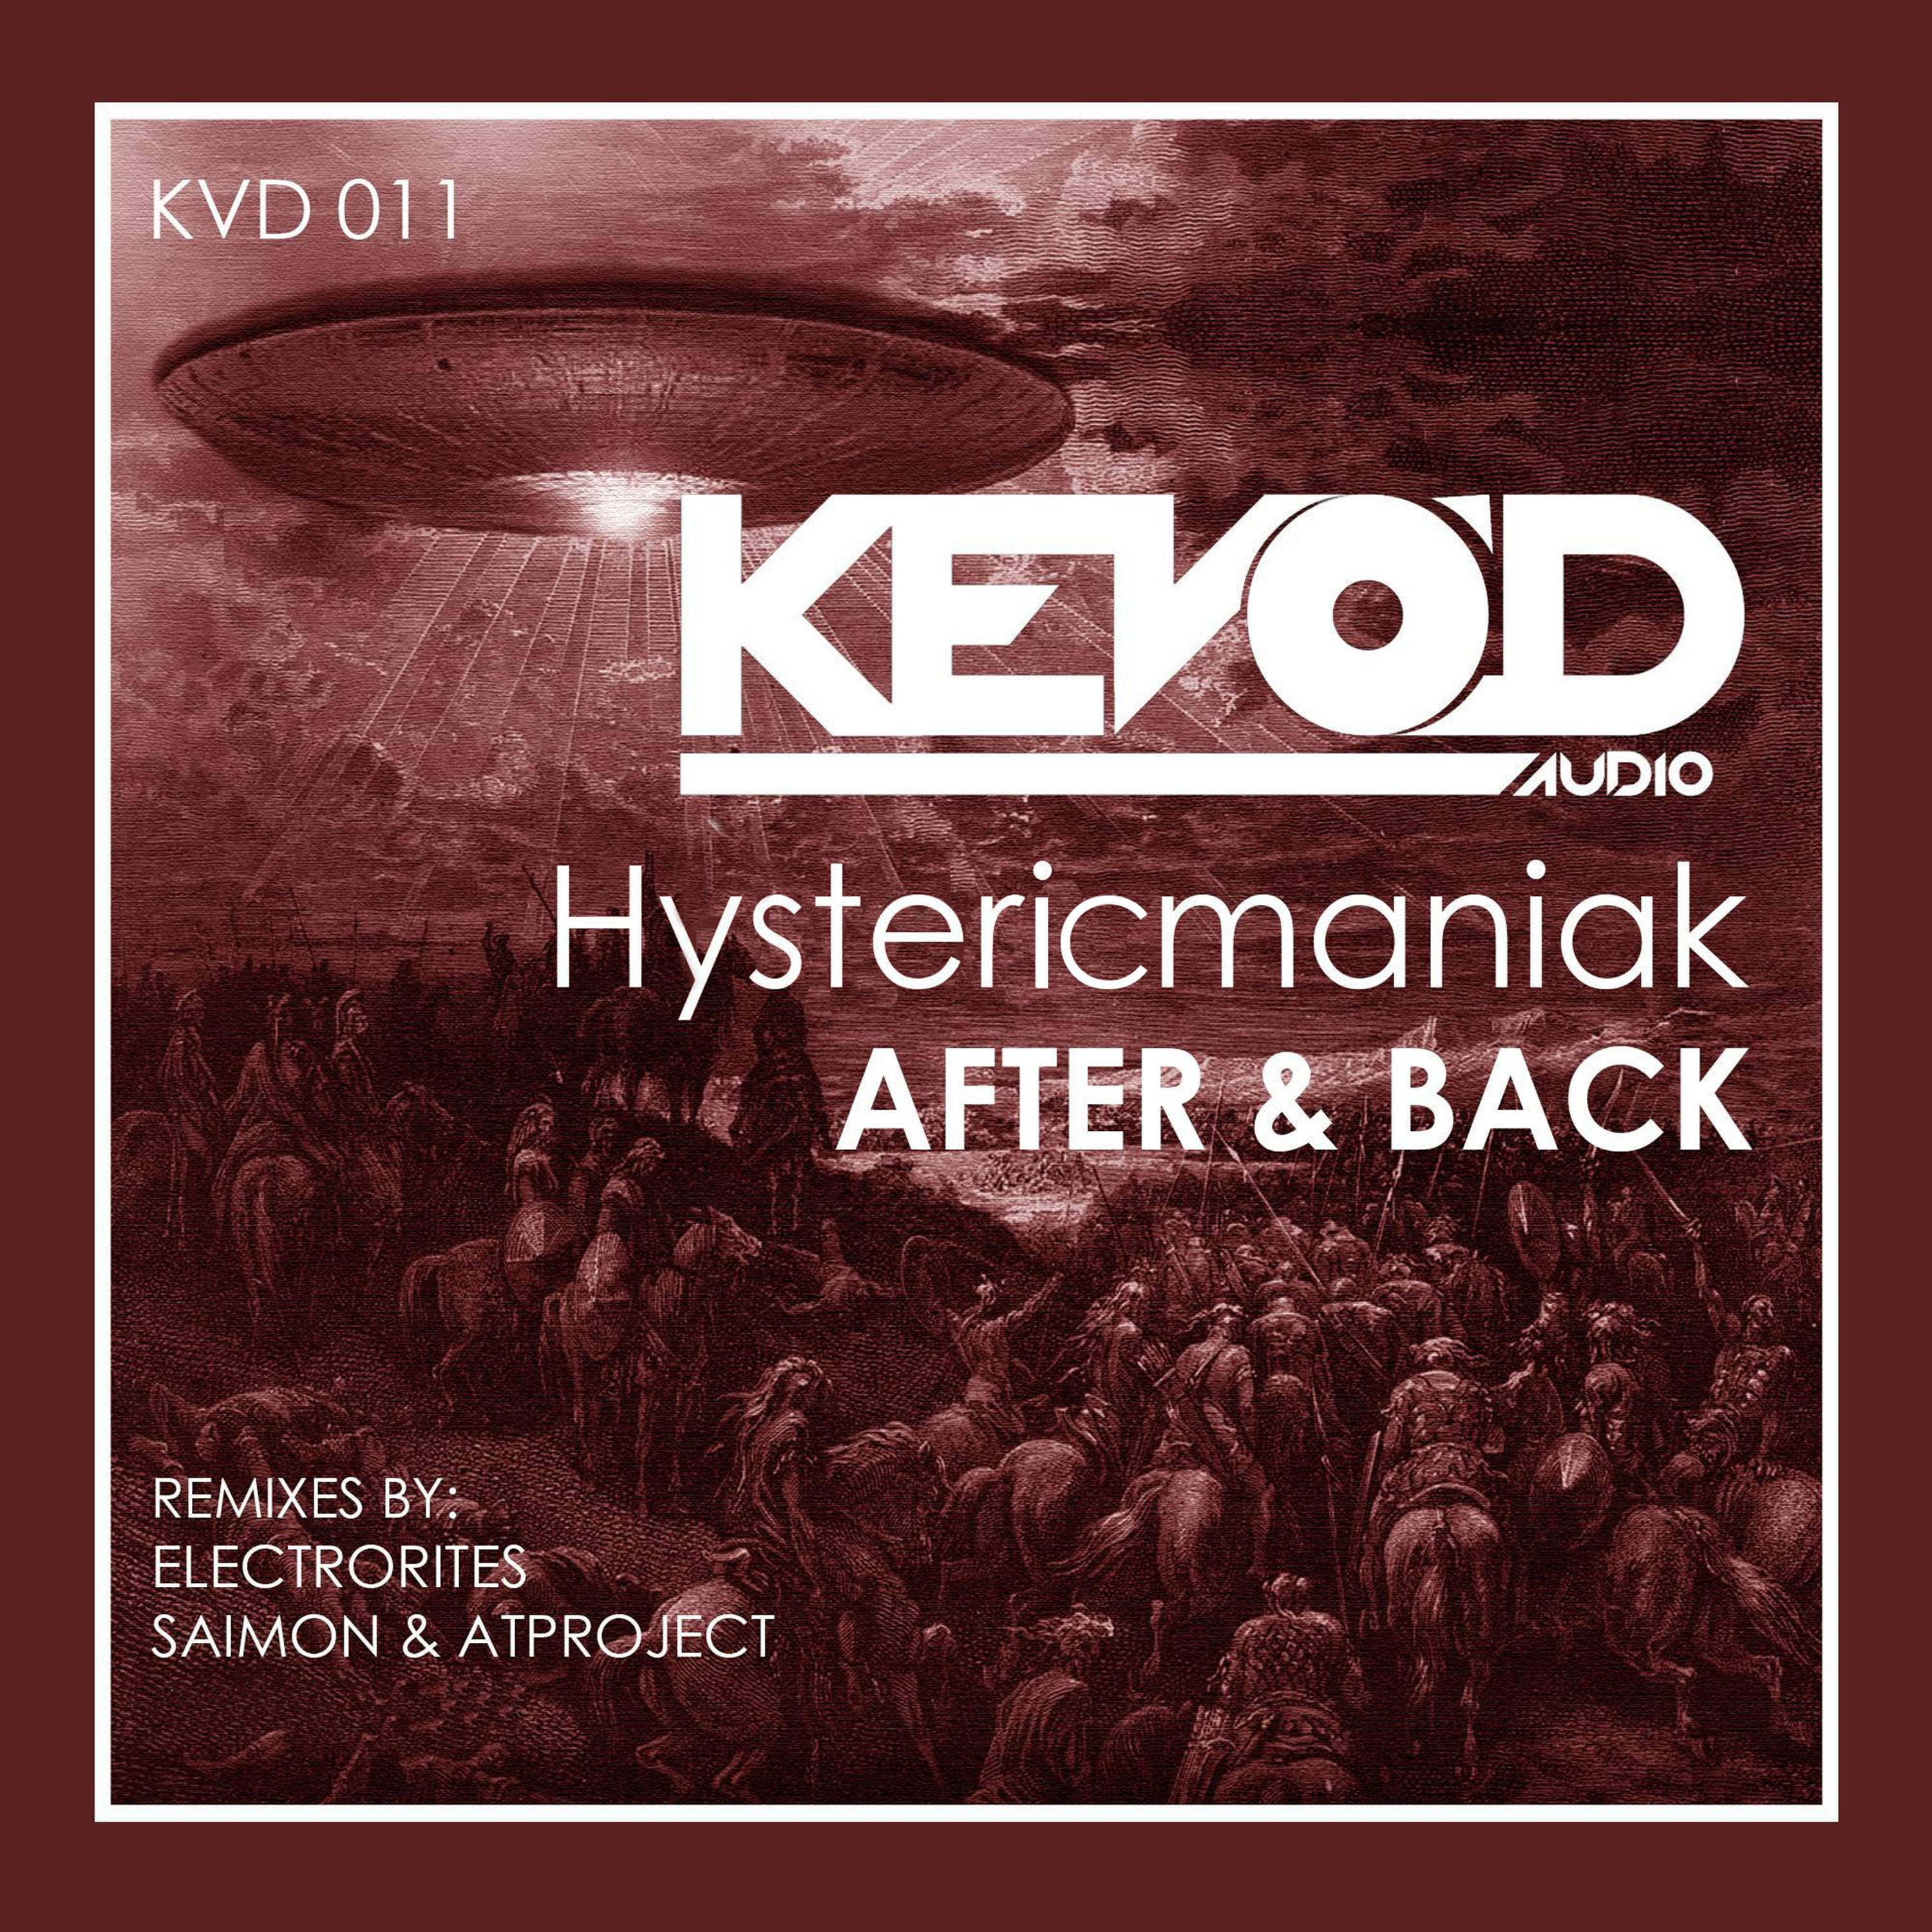 Hystericmaniak - After & Back (Saimon & Atproject Remix)